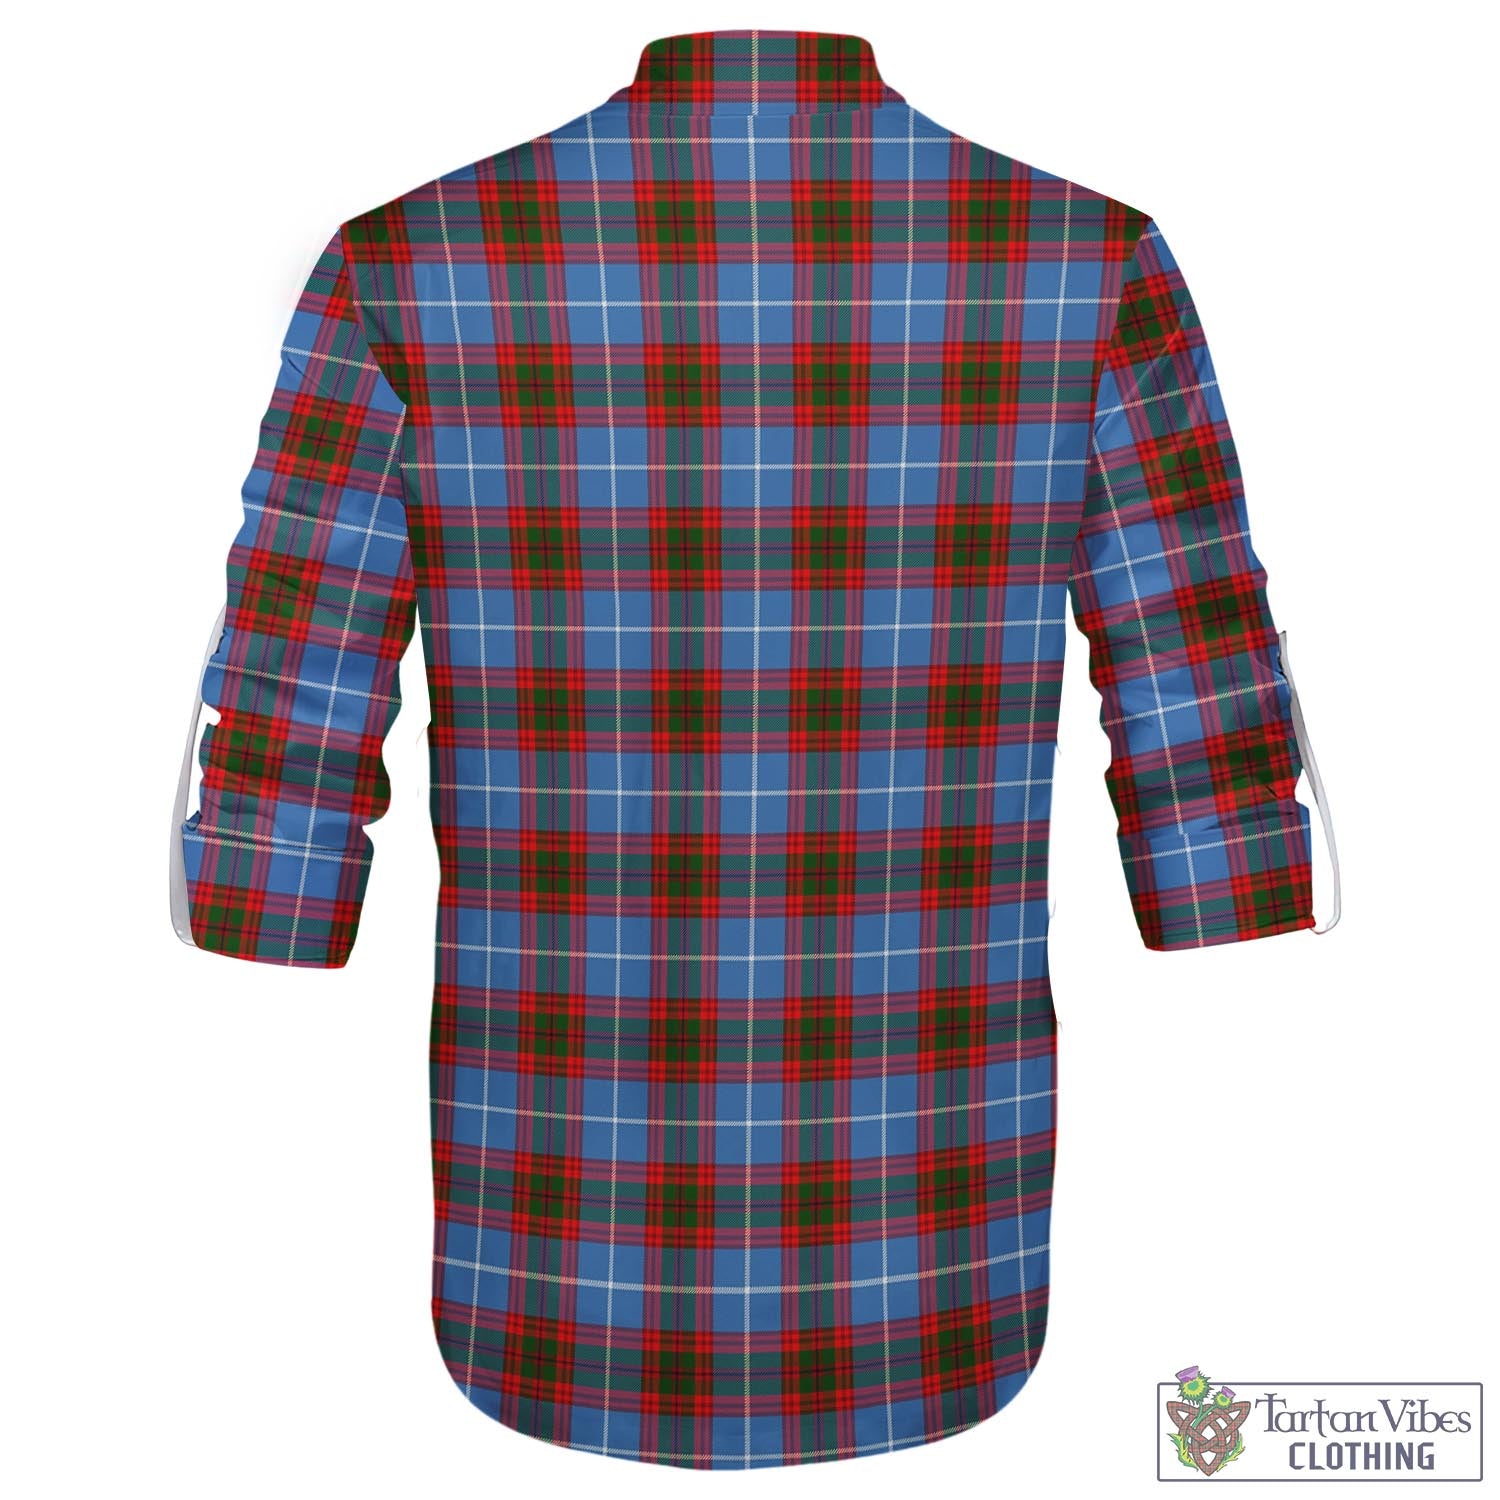 Tartan Vibes Clothing Crichton Tartan Men's Scottish Traditional Jacobite Ghillie Kilt Shirt with Family Crest